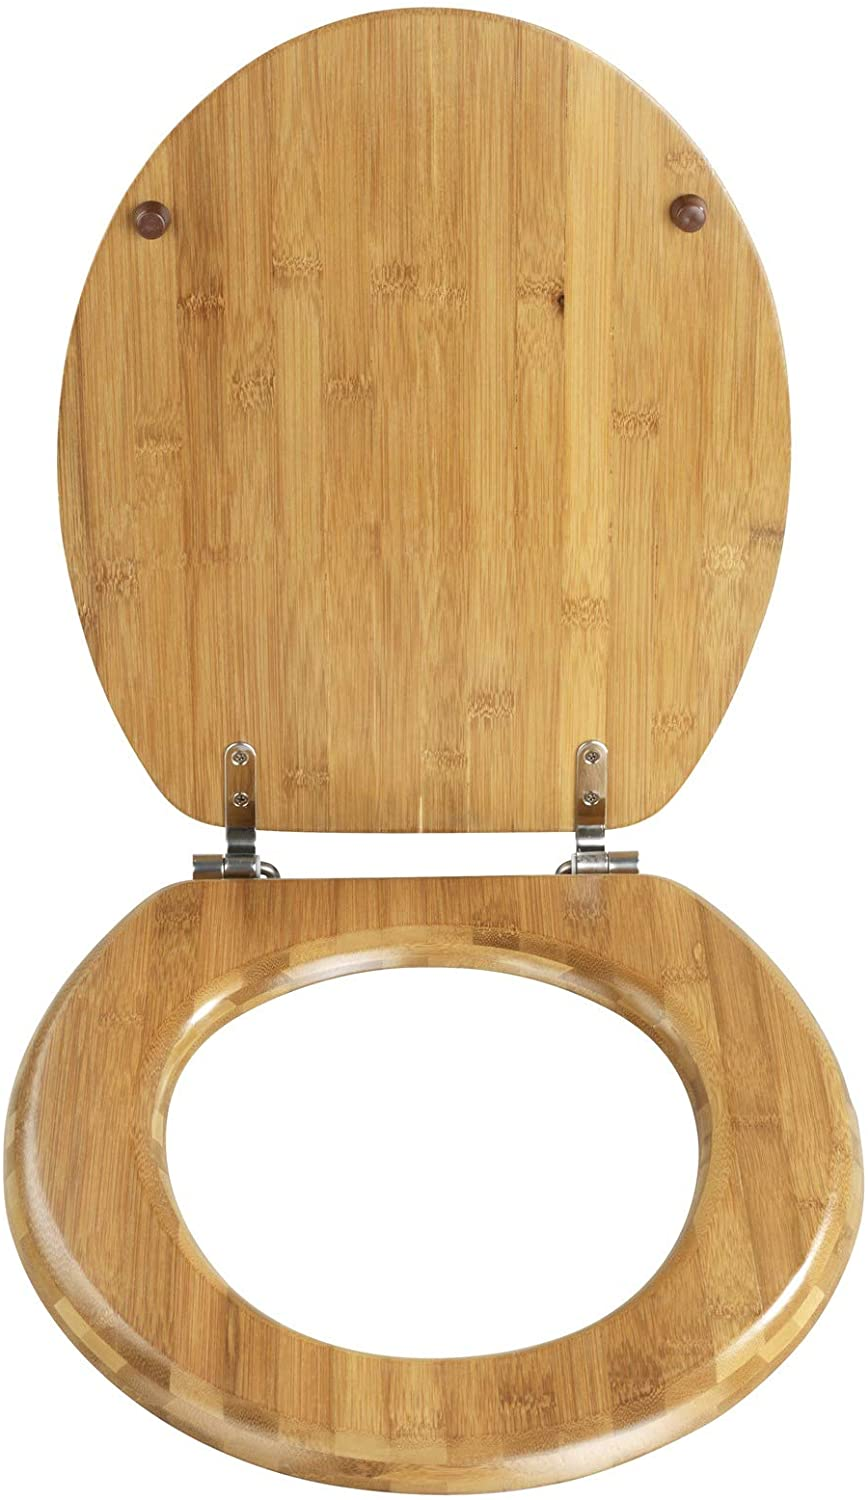 WC-Sitz Bambus Dunkel - Toilettensitz, Edelstahlbefestigung, Bambus, 34 x 41 cm,